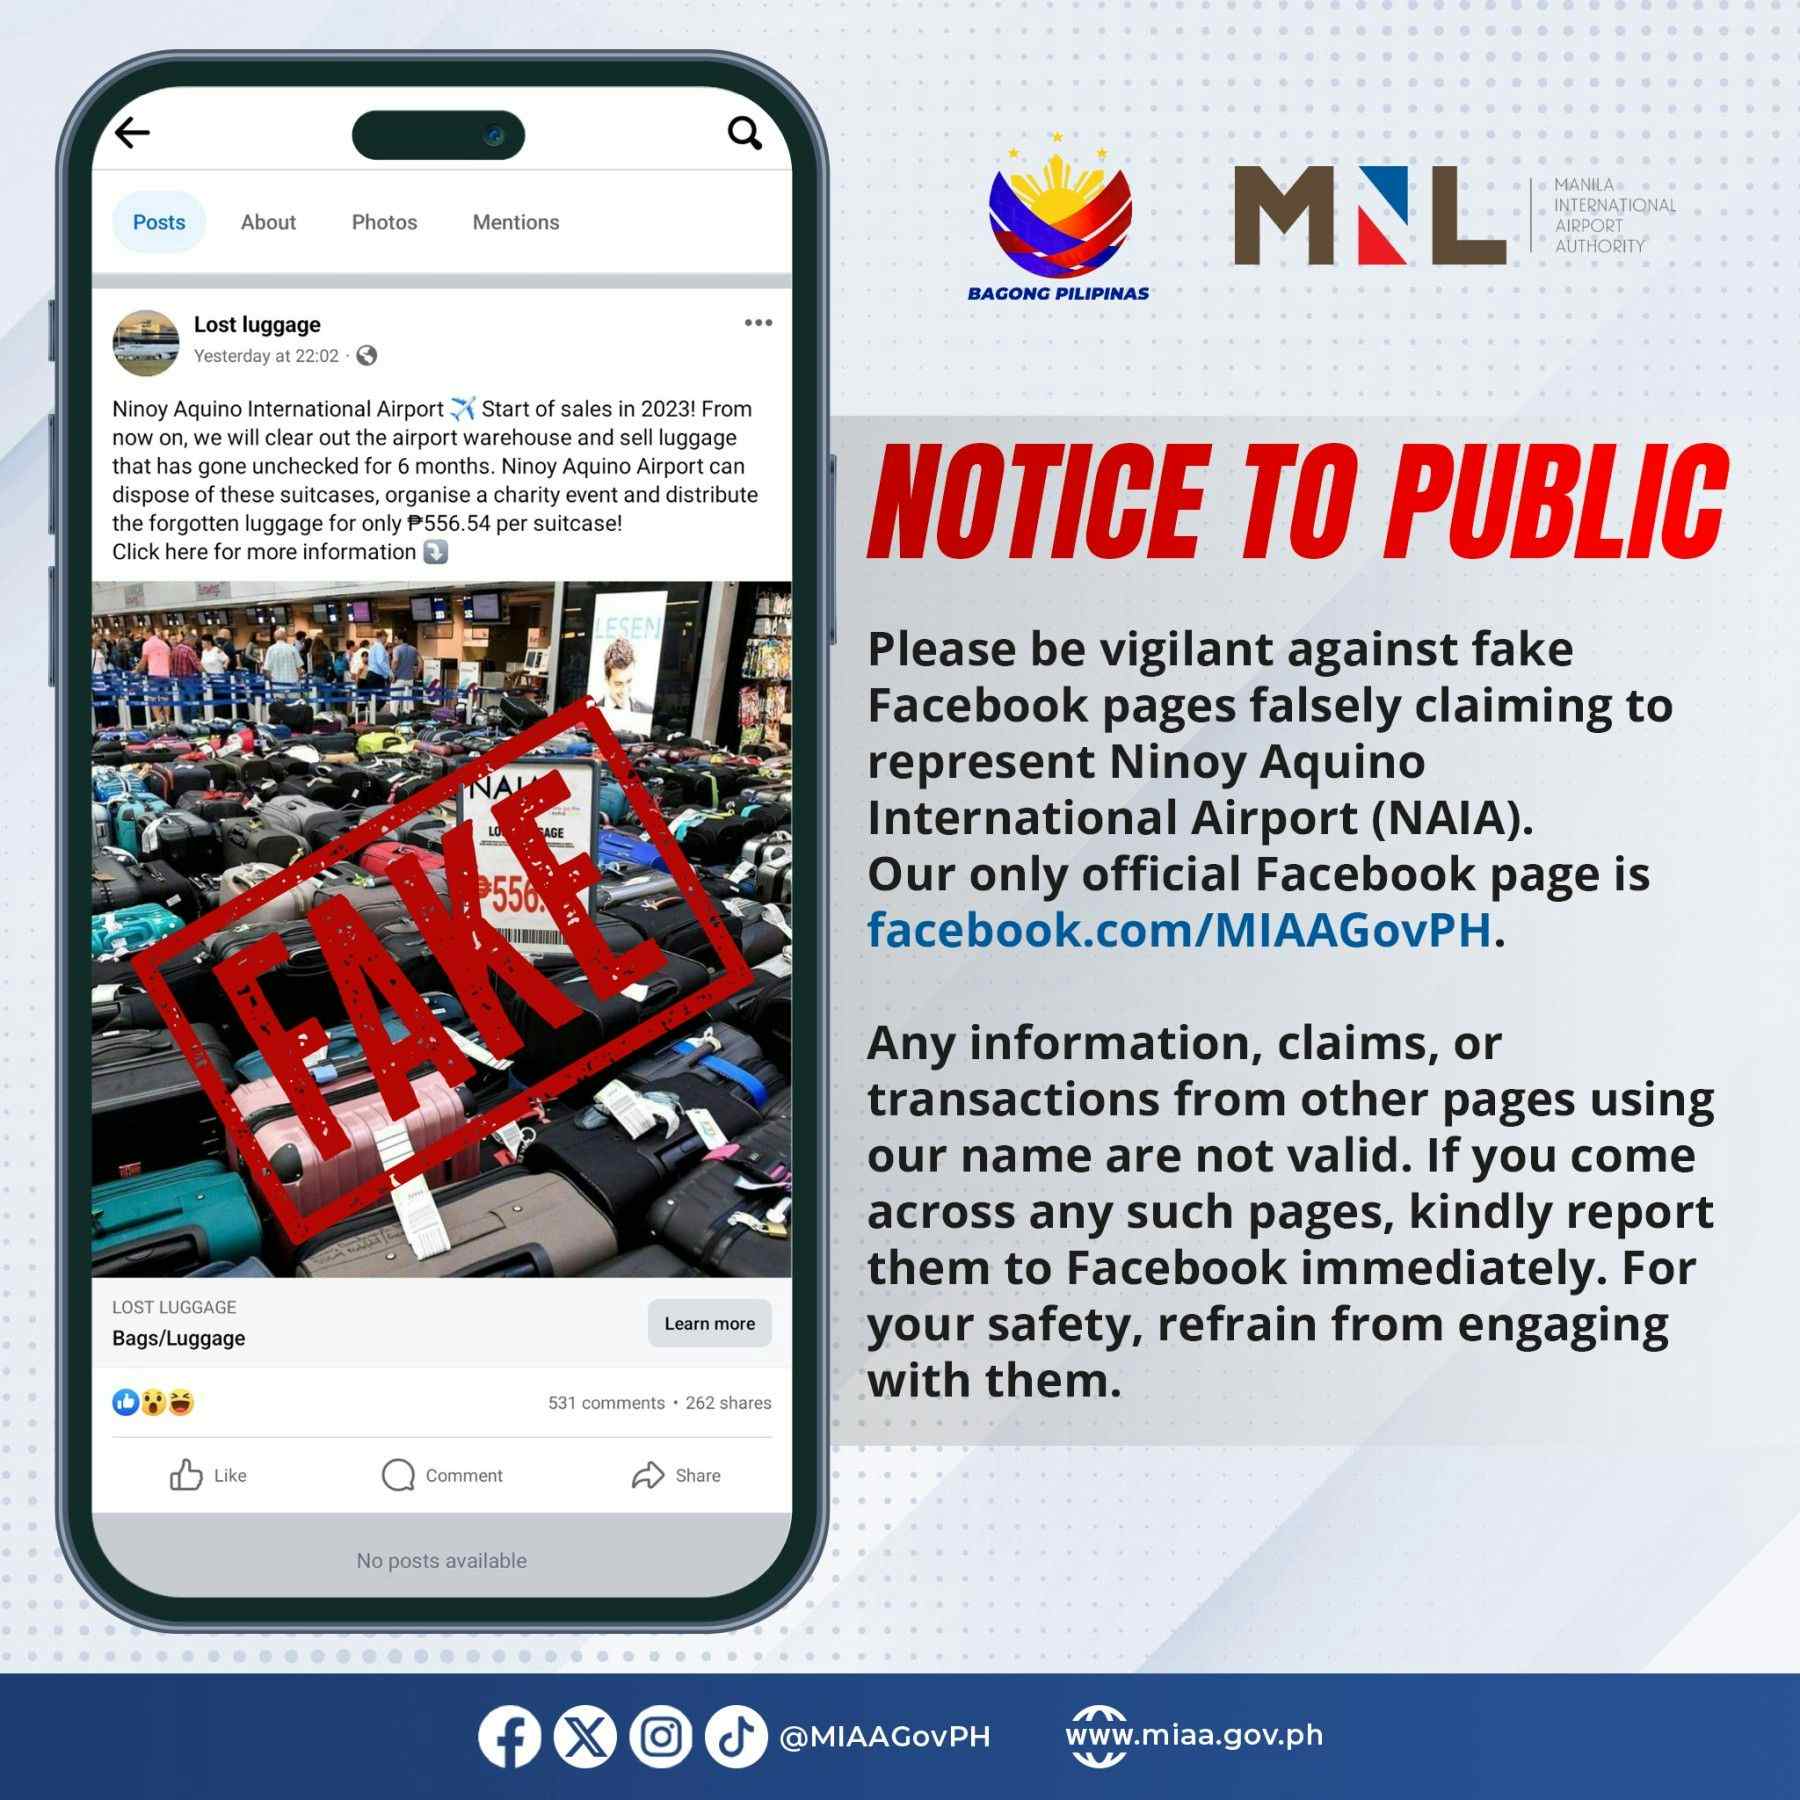 MIAA warns public against false social media advertising